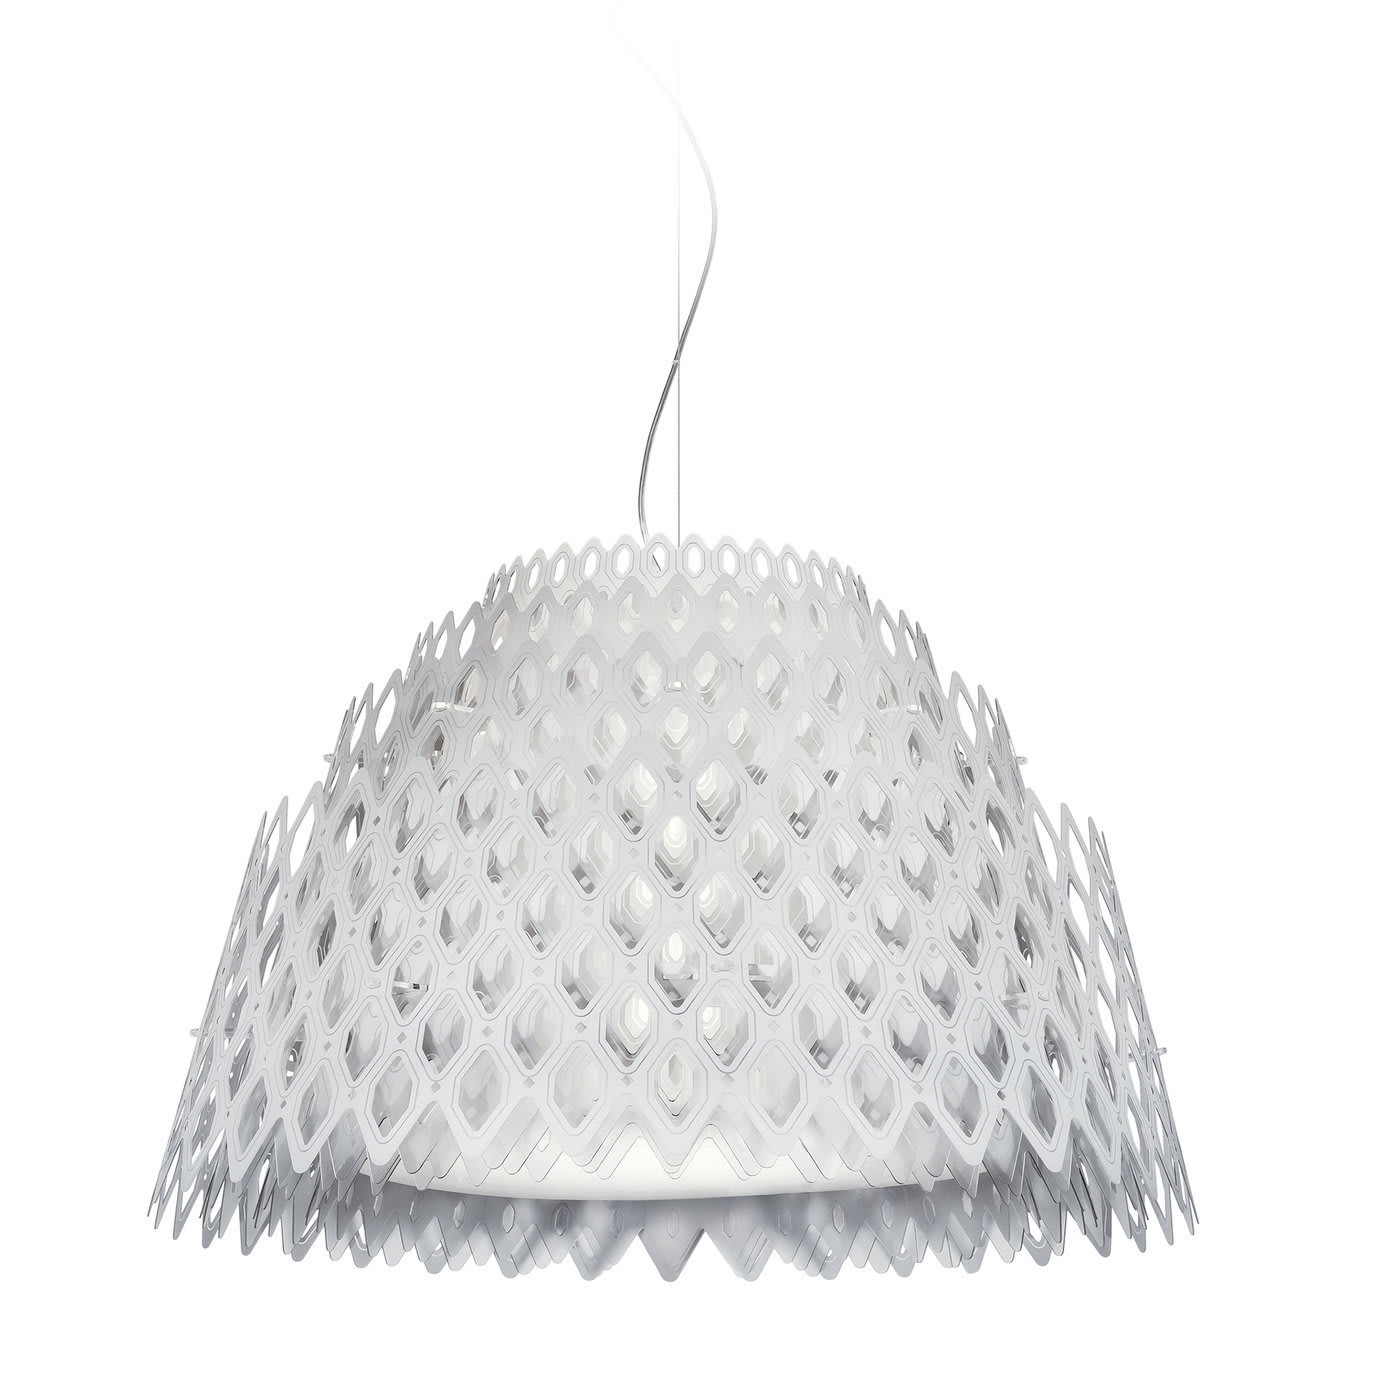 Half Charlotte Ceiling Lamp by Doriana and Massimiliano Fuksas - Slamp